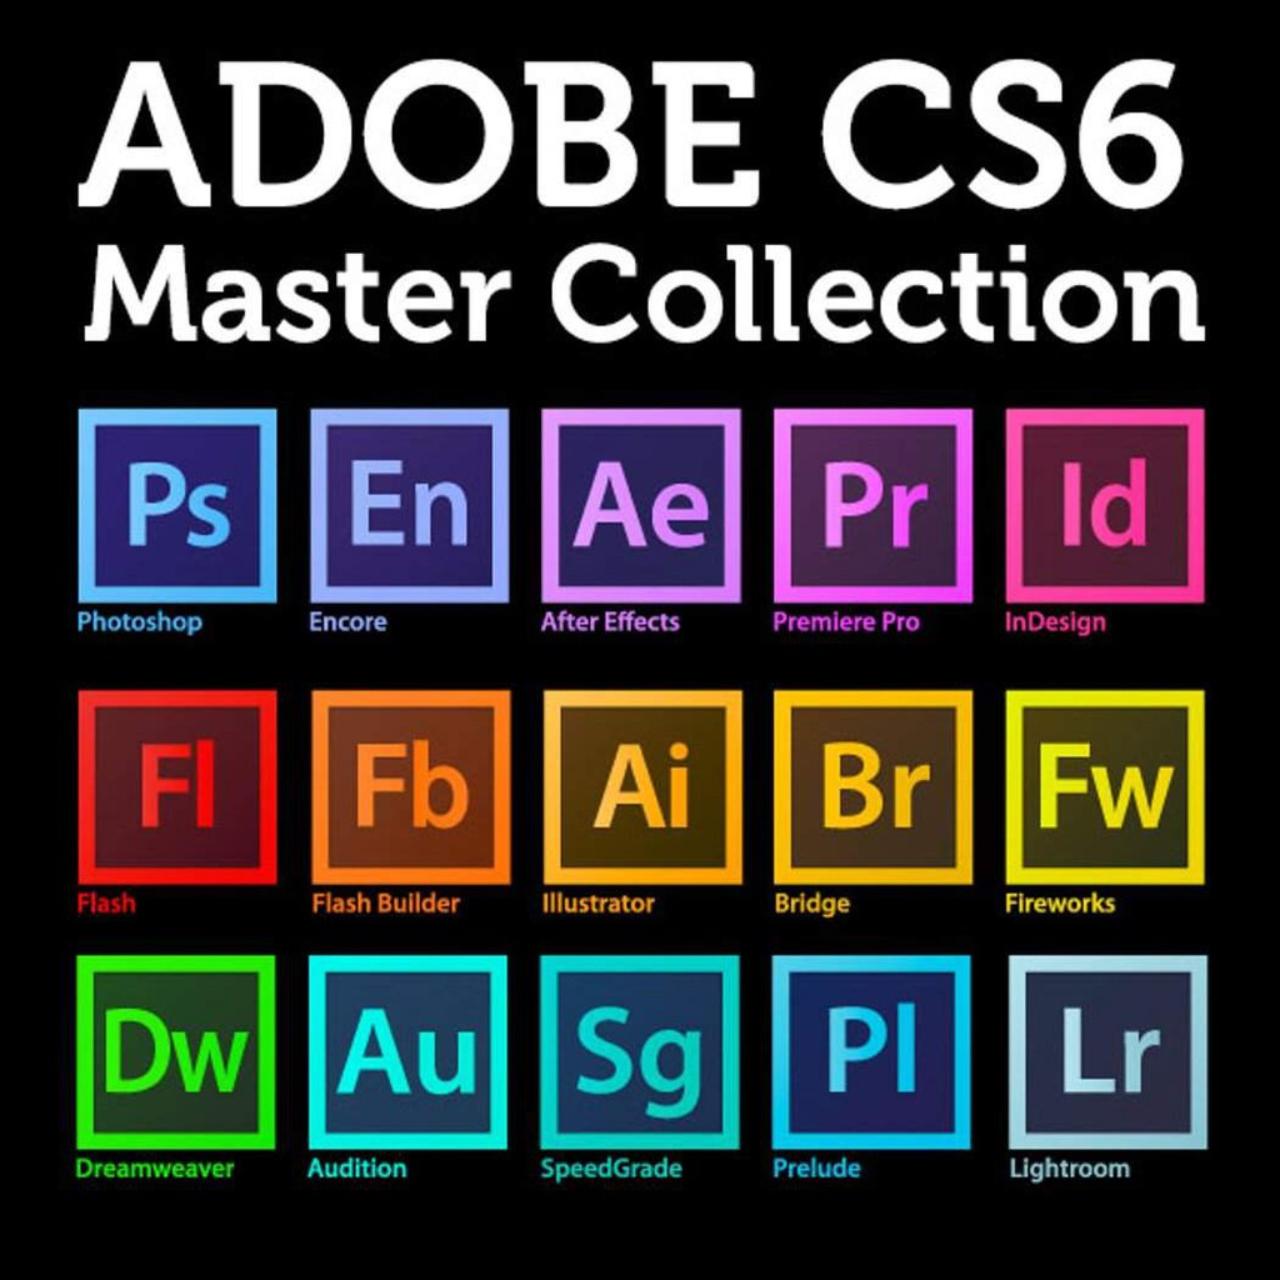 Adobe CS6 Windows Master Collection Full complete - Depop